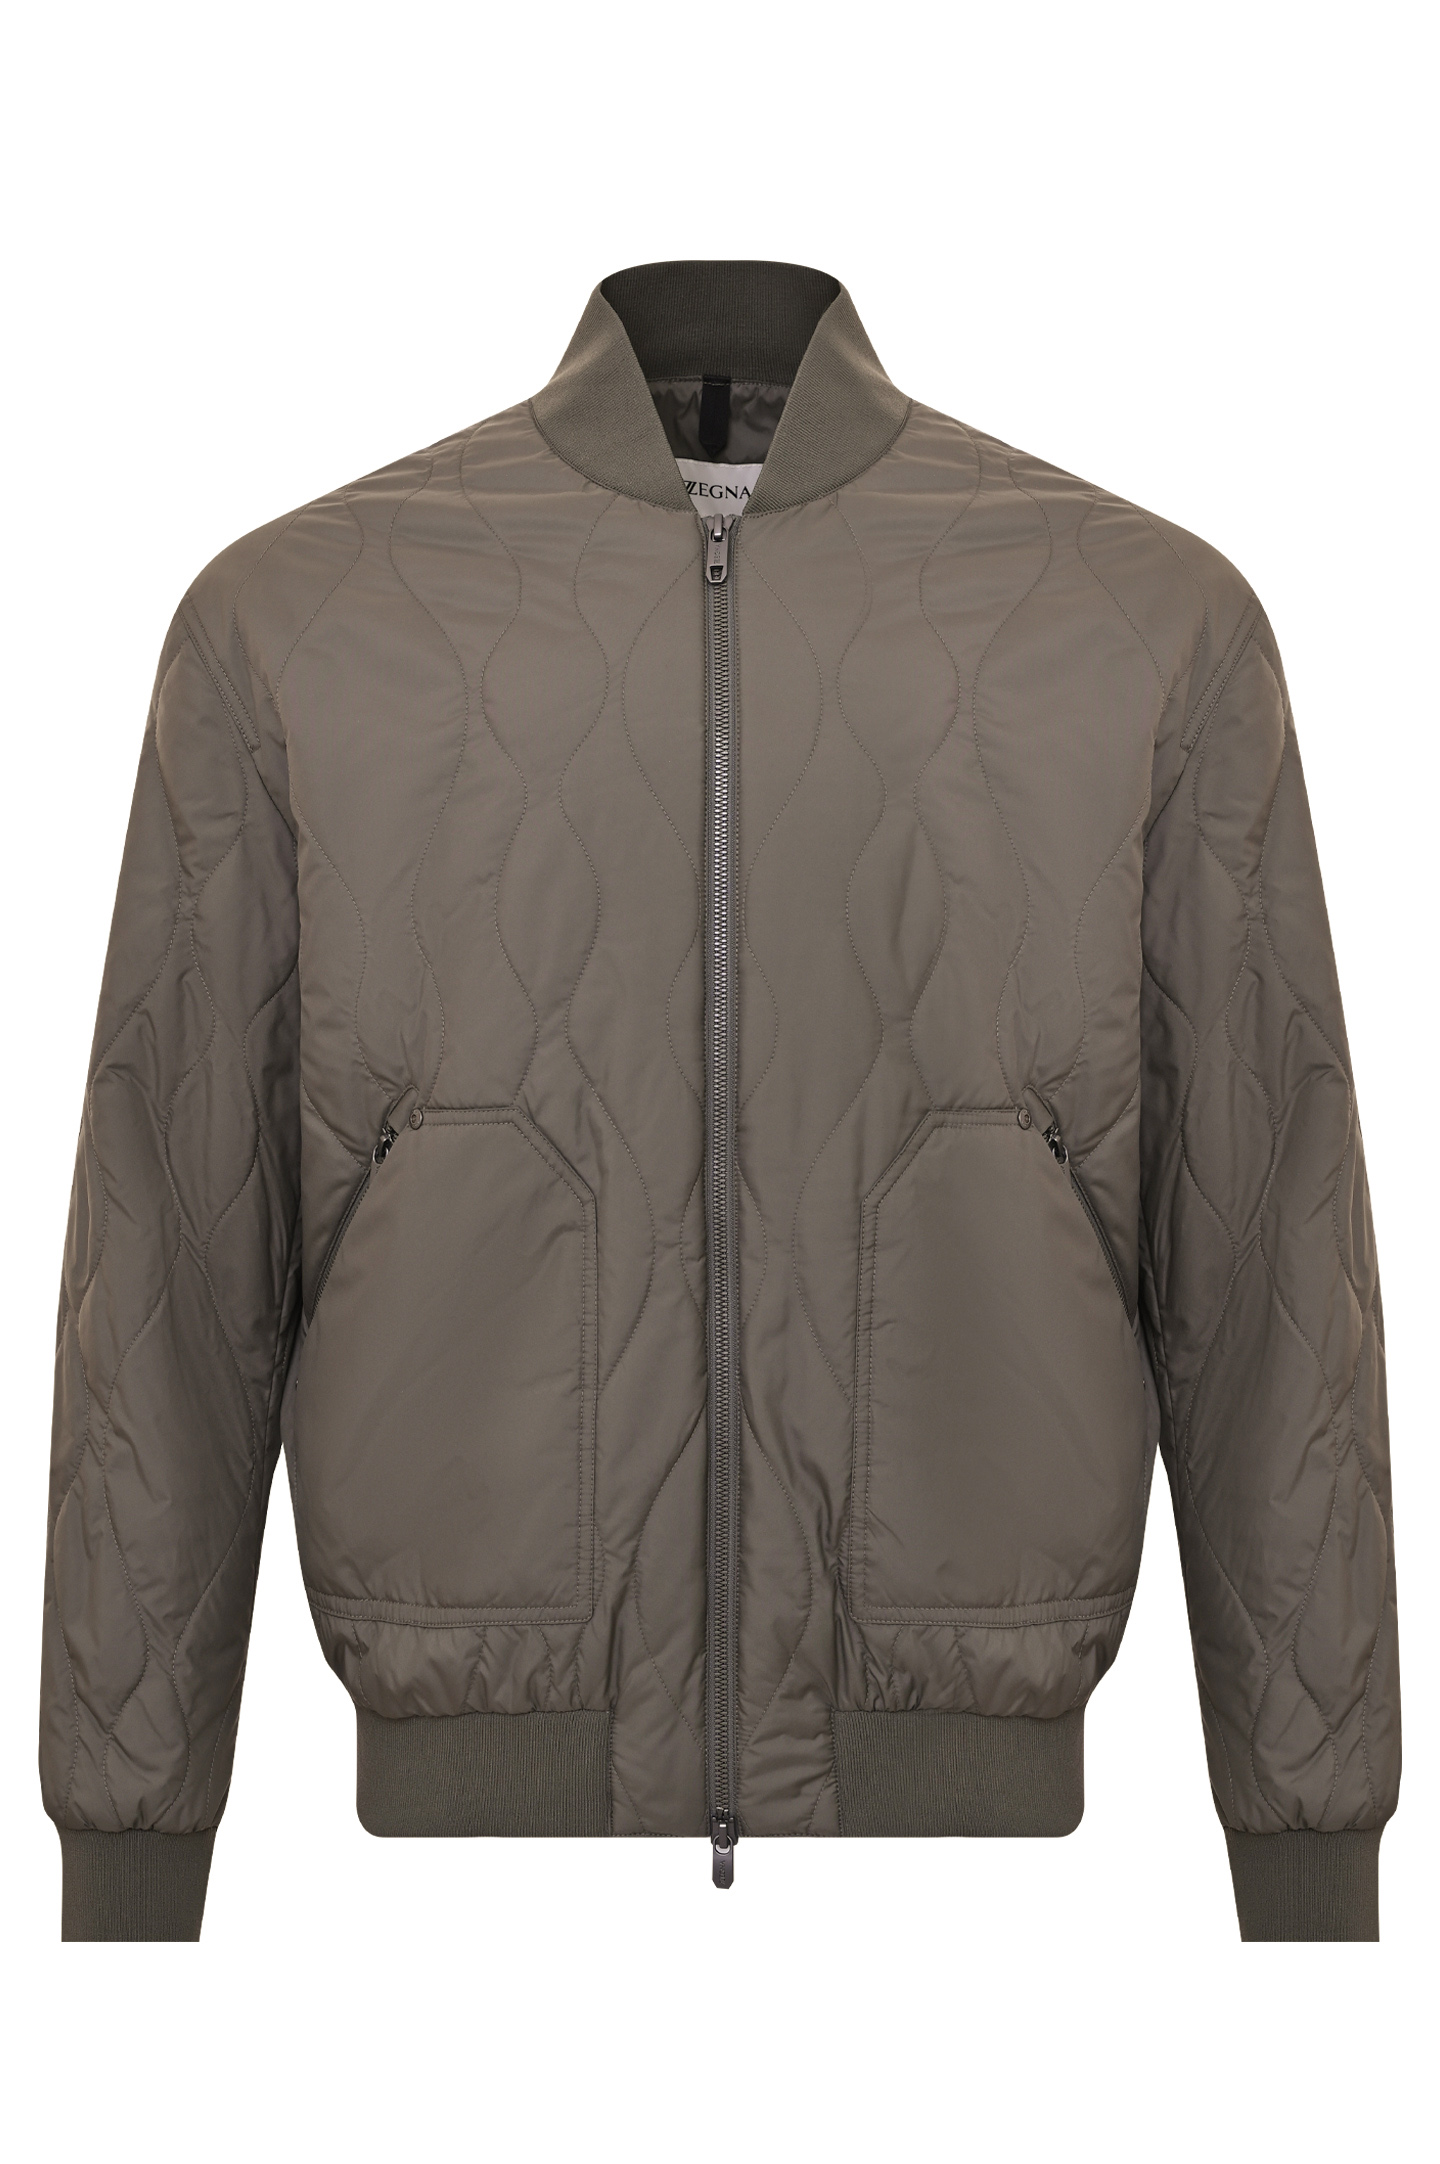 Куртка Z ZEGNA VZ023 ZZ020/1, цвет: Серый, Мужской